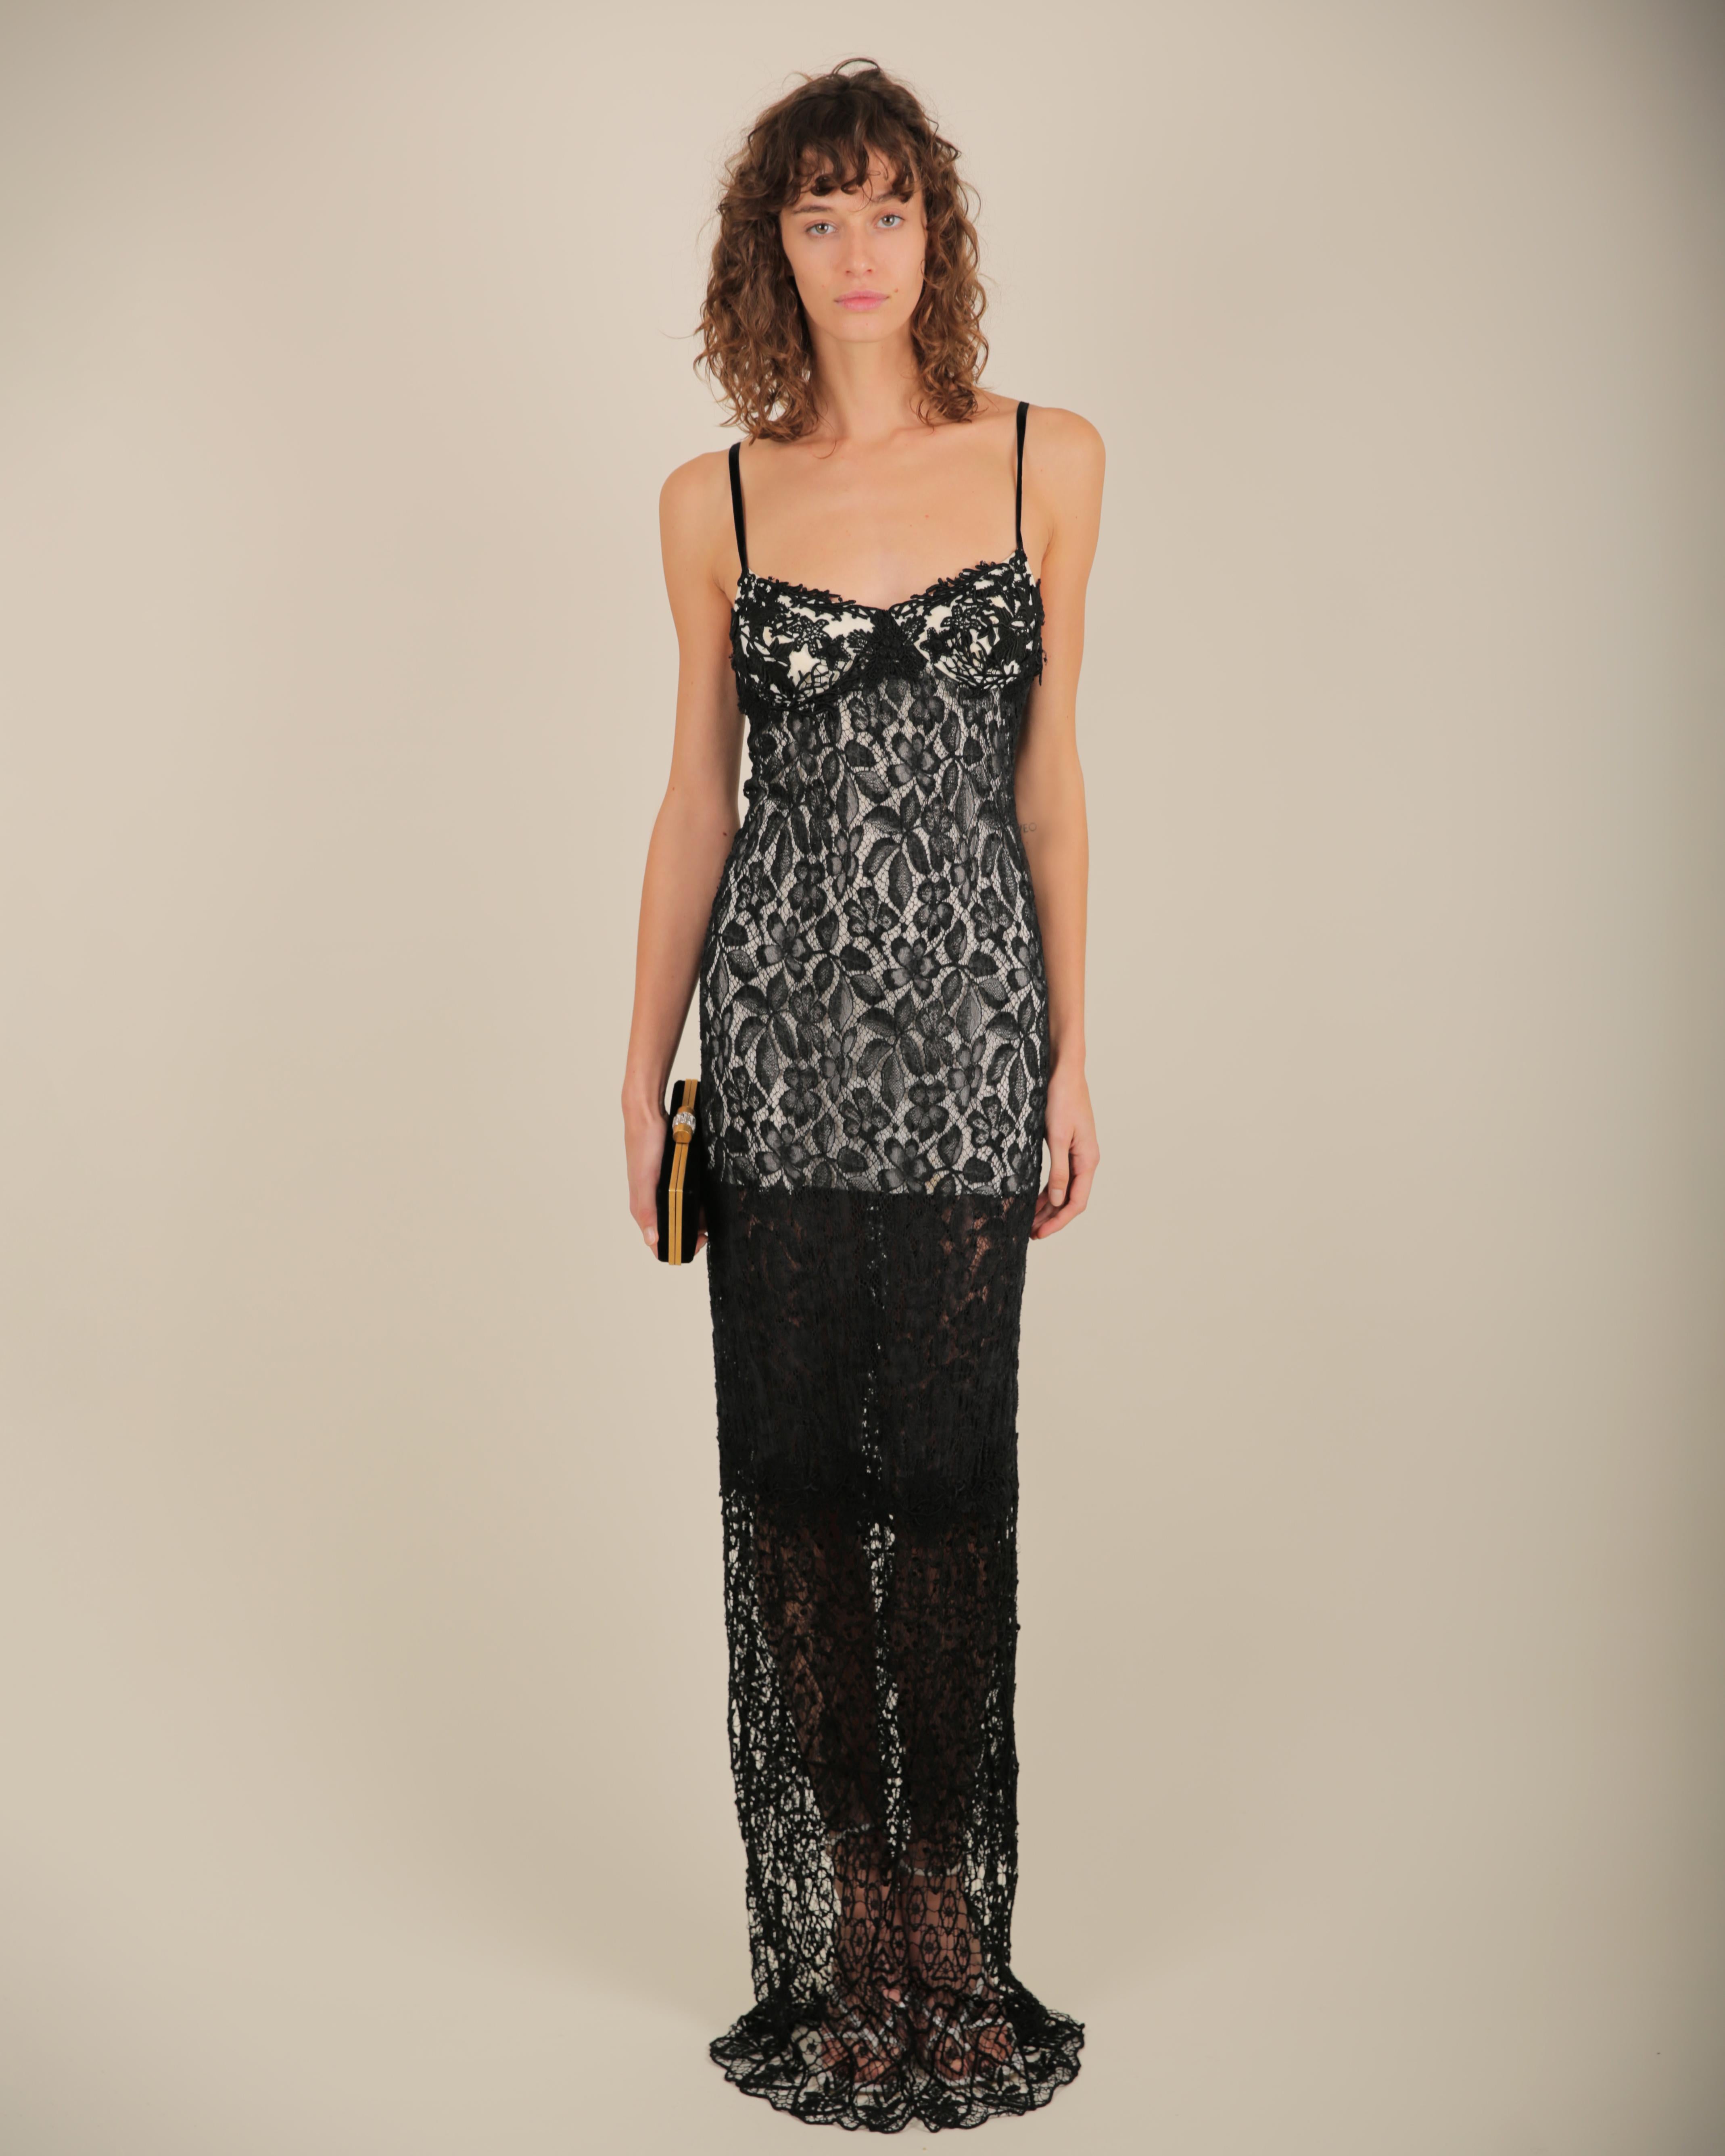 Lolita Lempicka FW 1995 Black white sheer crochet lace overlay bustier dress 40 For Sale 7